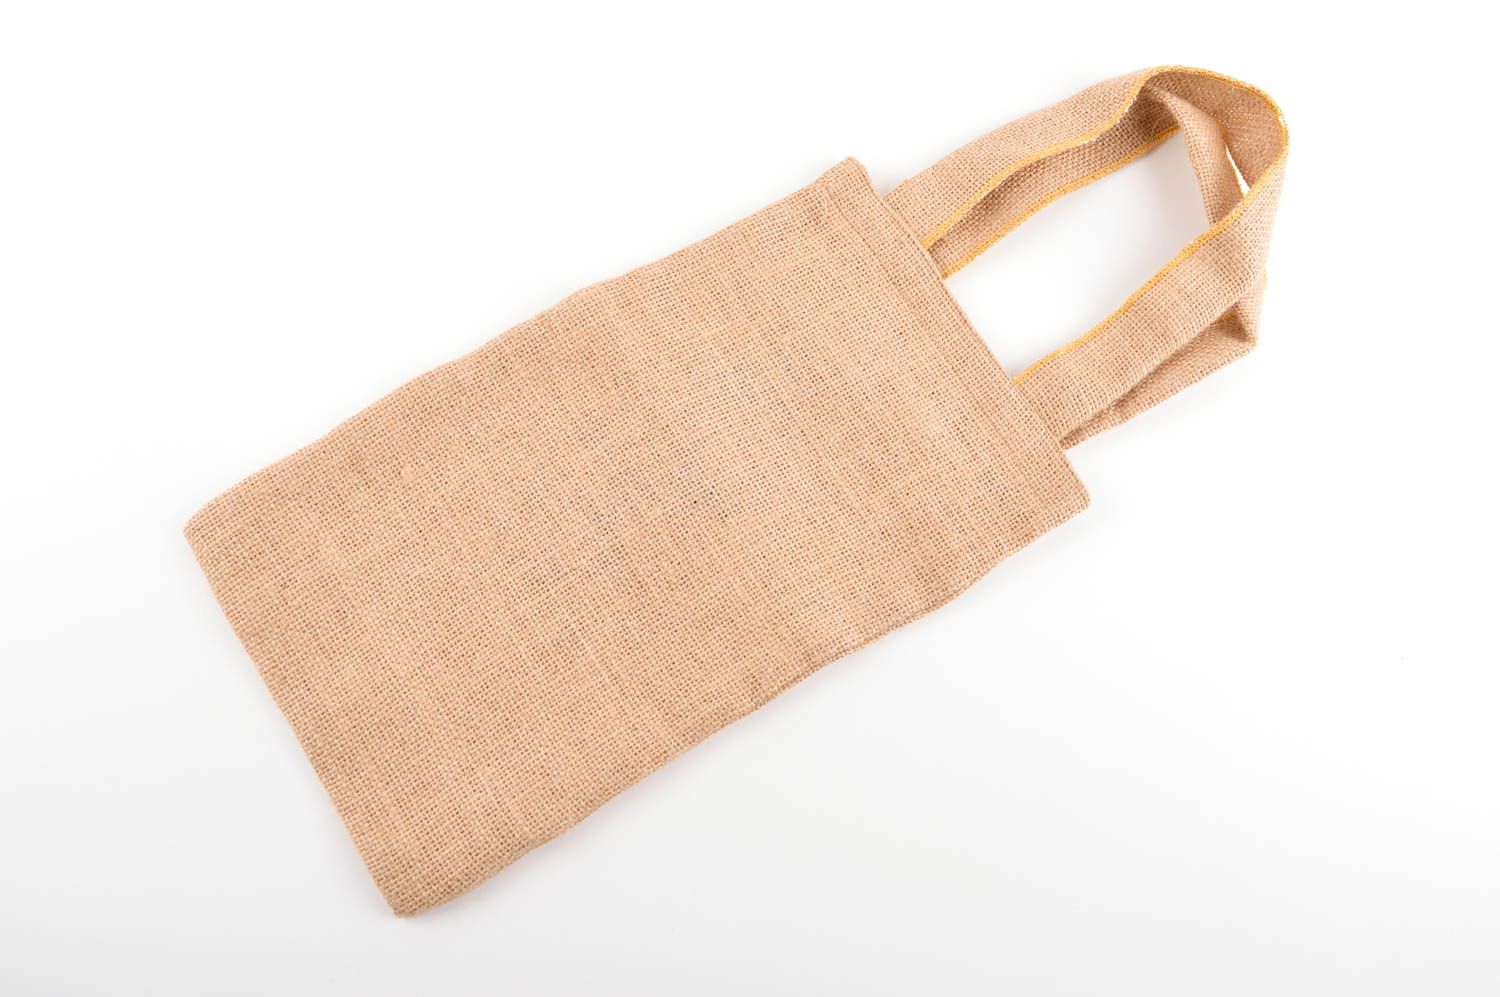 Handmade bag designer bag unusual handbag for women gift ideas textile bag photo 2